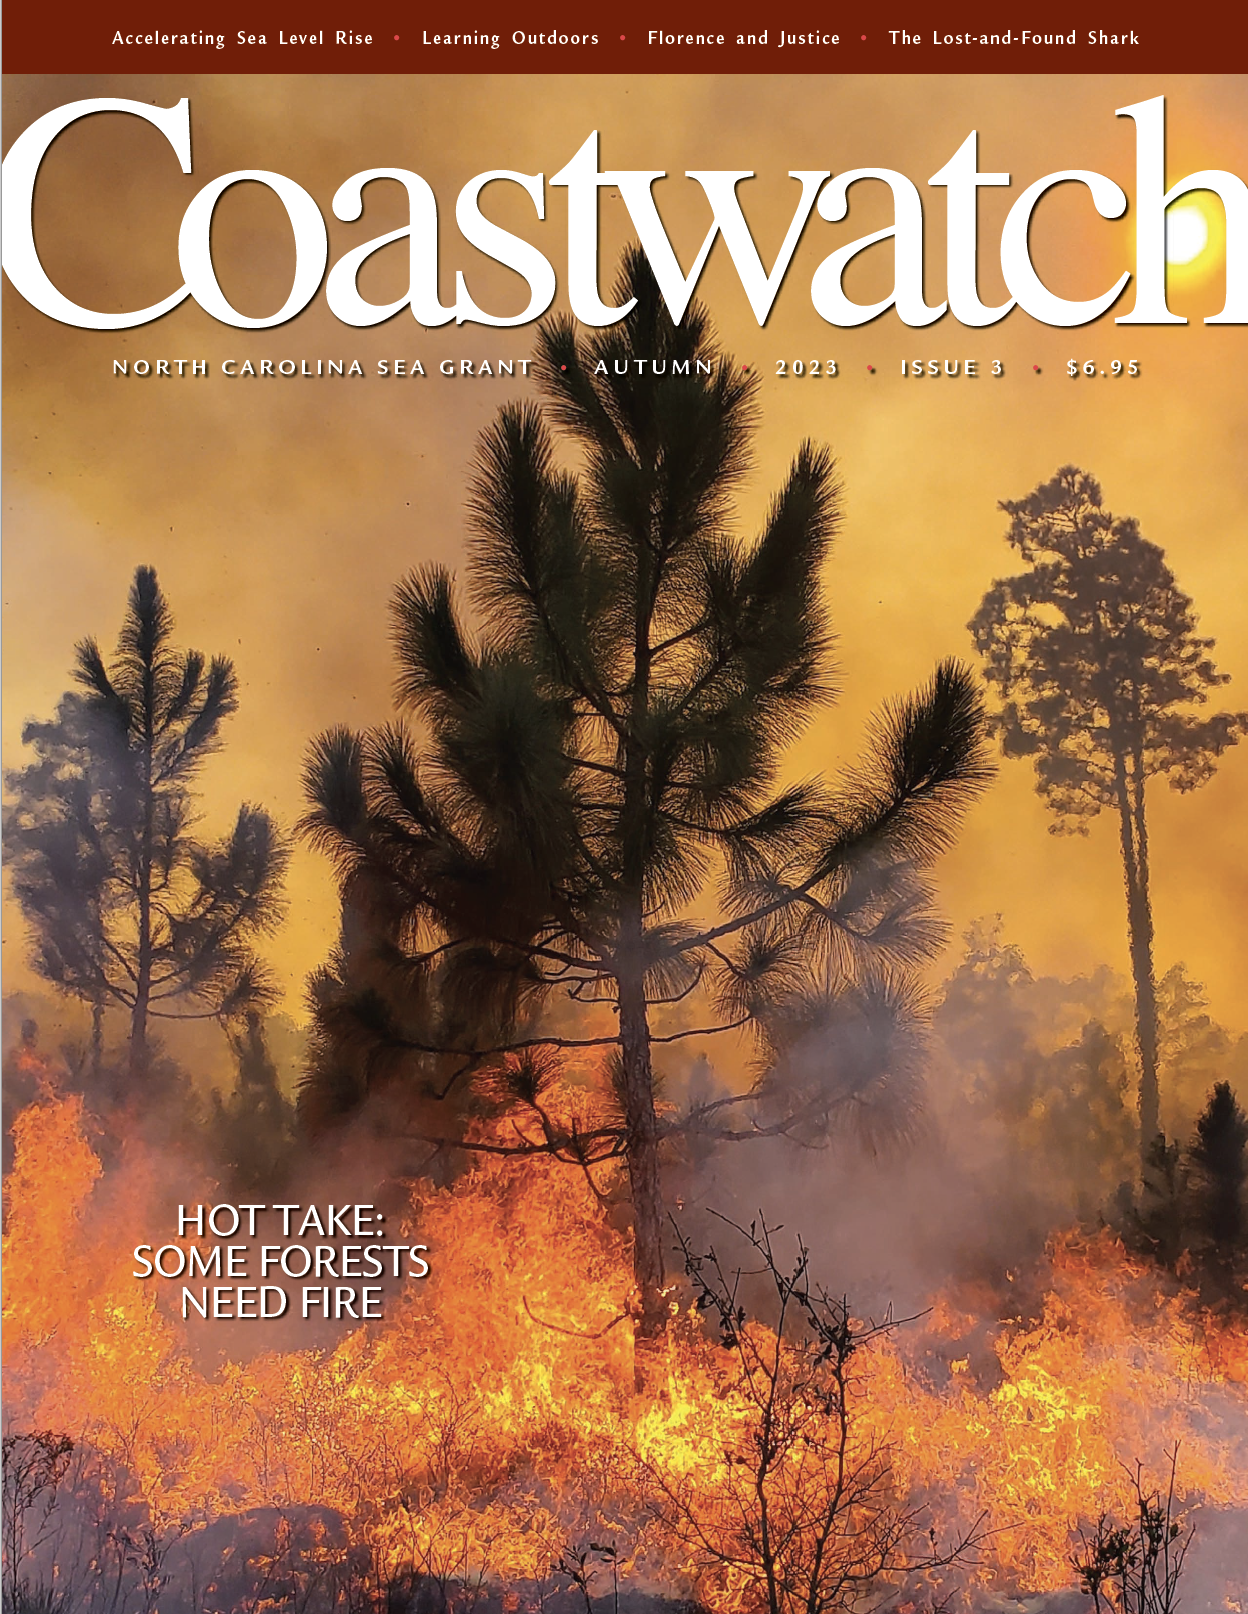 image: FALL 2023 COASTWATCH MAGAZINE cover -- prescribed burn.